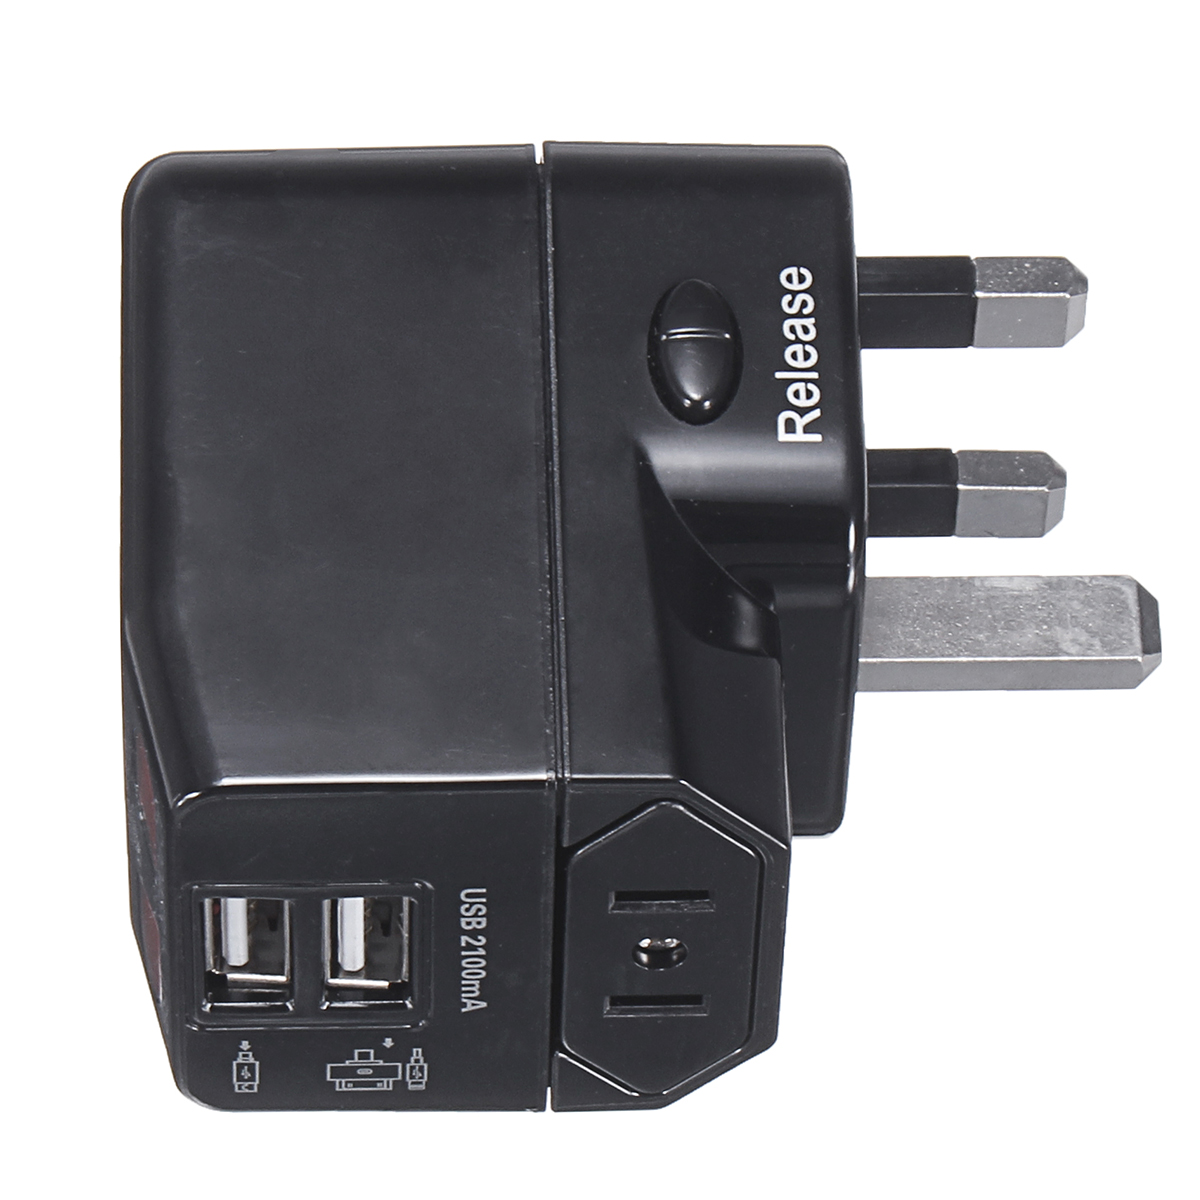 125-250V-USUKAUEU-Universal-World-Travel-Adapter-Plug-Dual-USB-Port-w-Surge-Protector-1286824-10